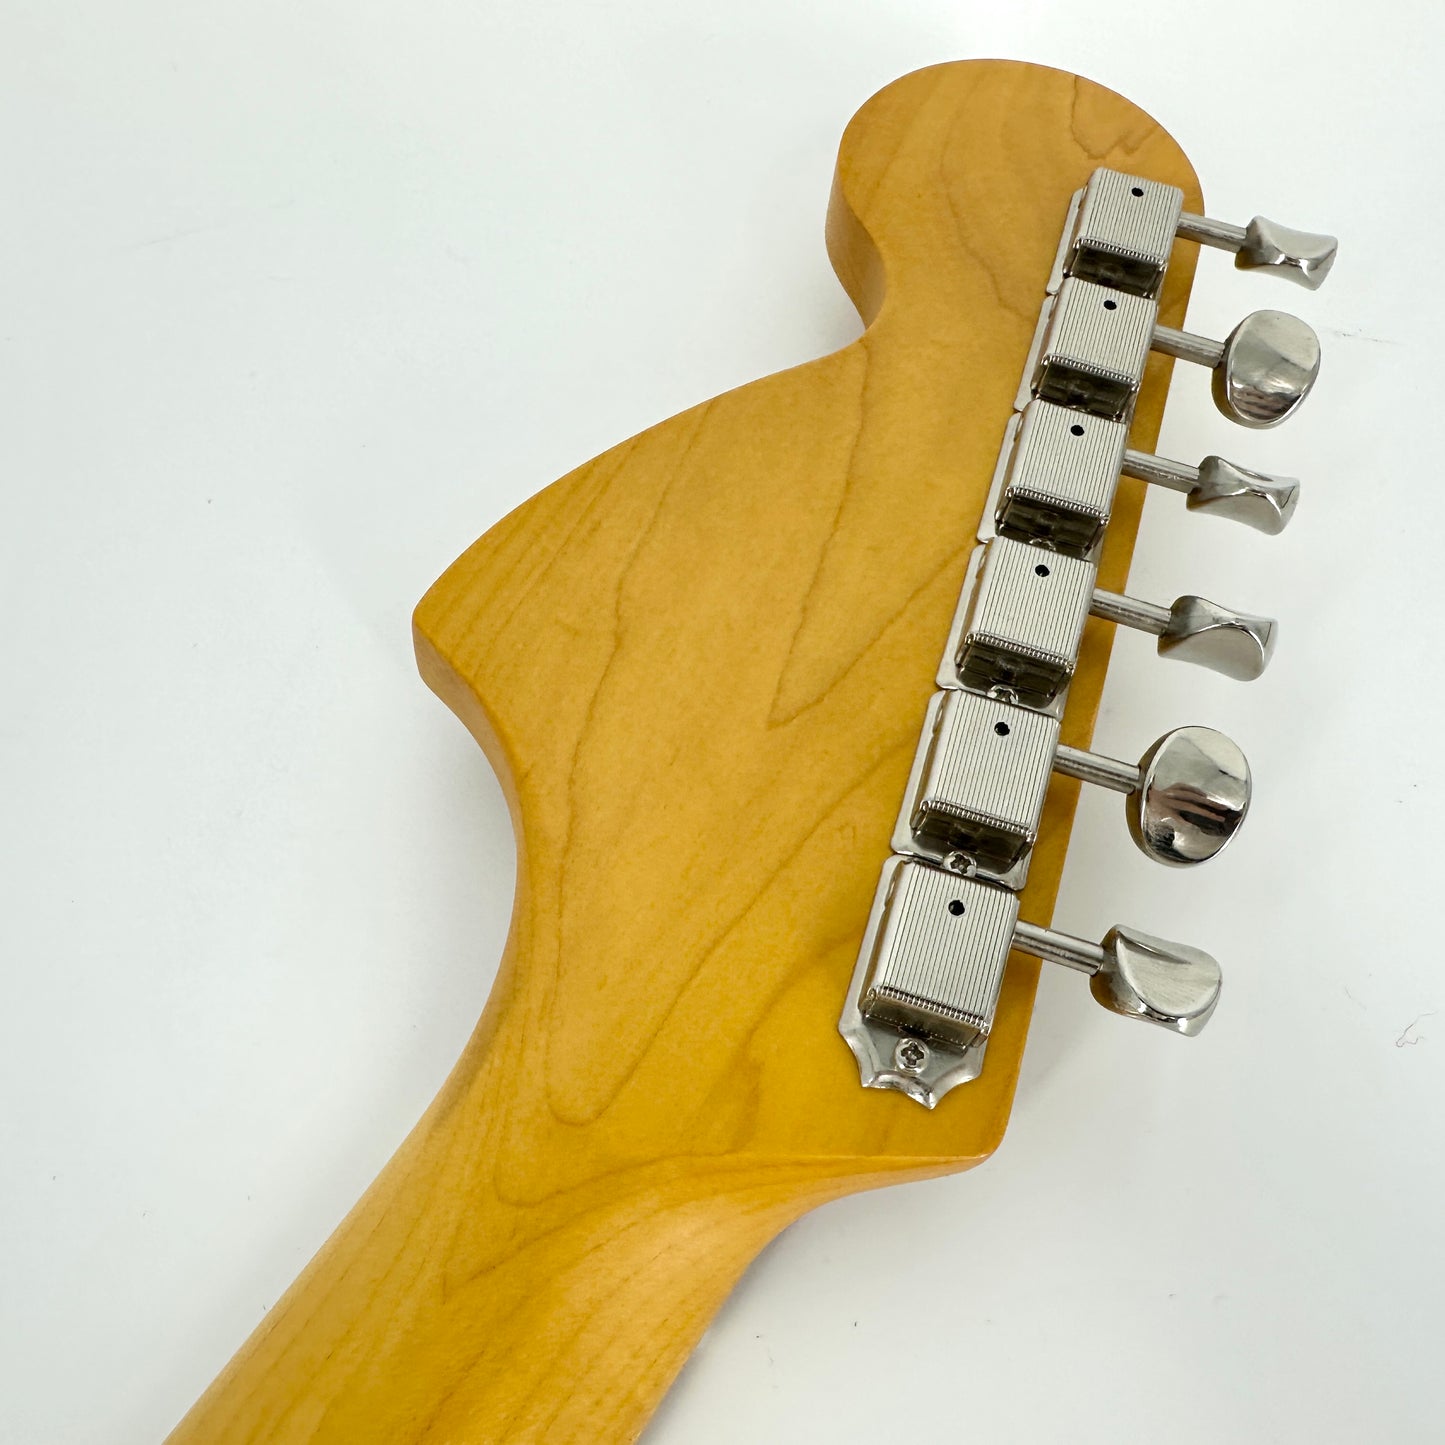 2022 Fender JV Modified Vintage 60's Japan Stratocaster – Olympic White